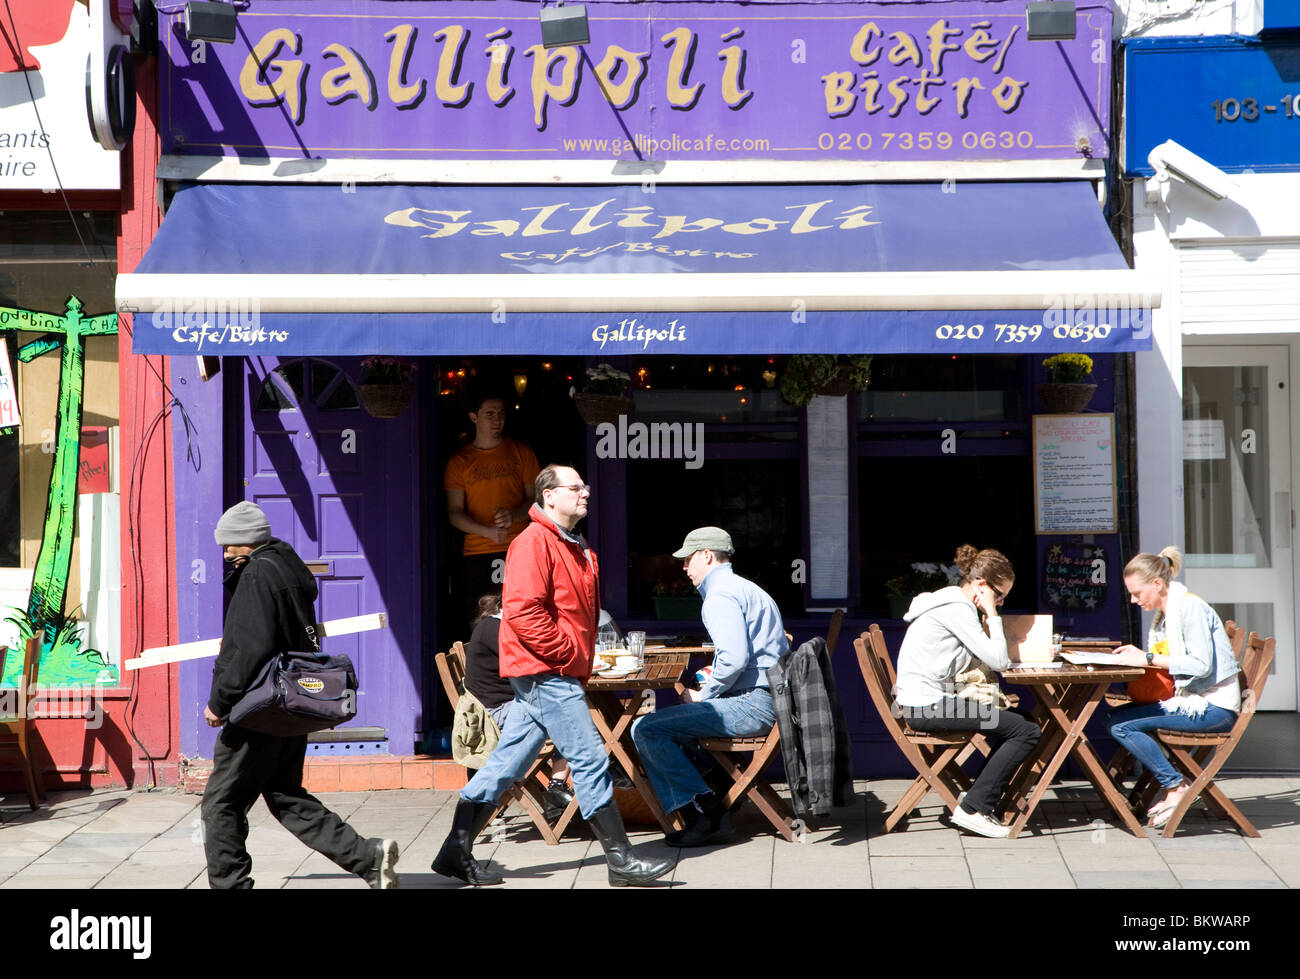 Türkisches Restaurant Gallipoli in Upper Street, Islington, London Stockfoto